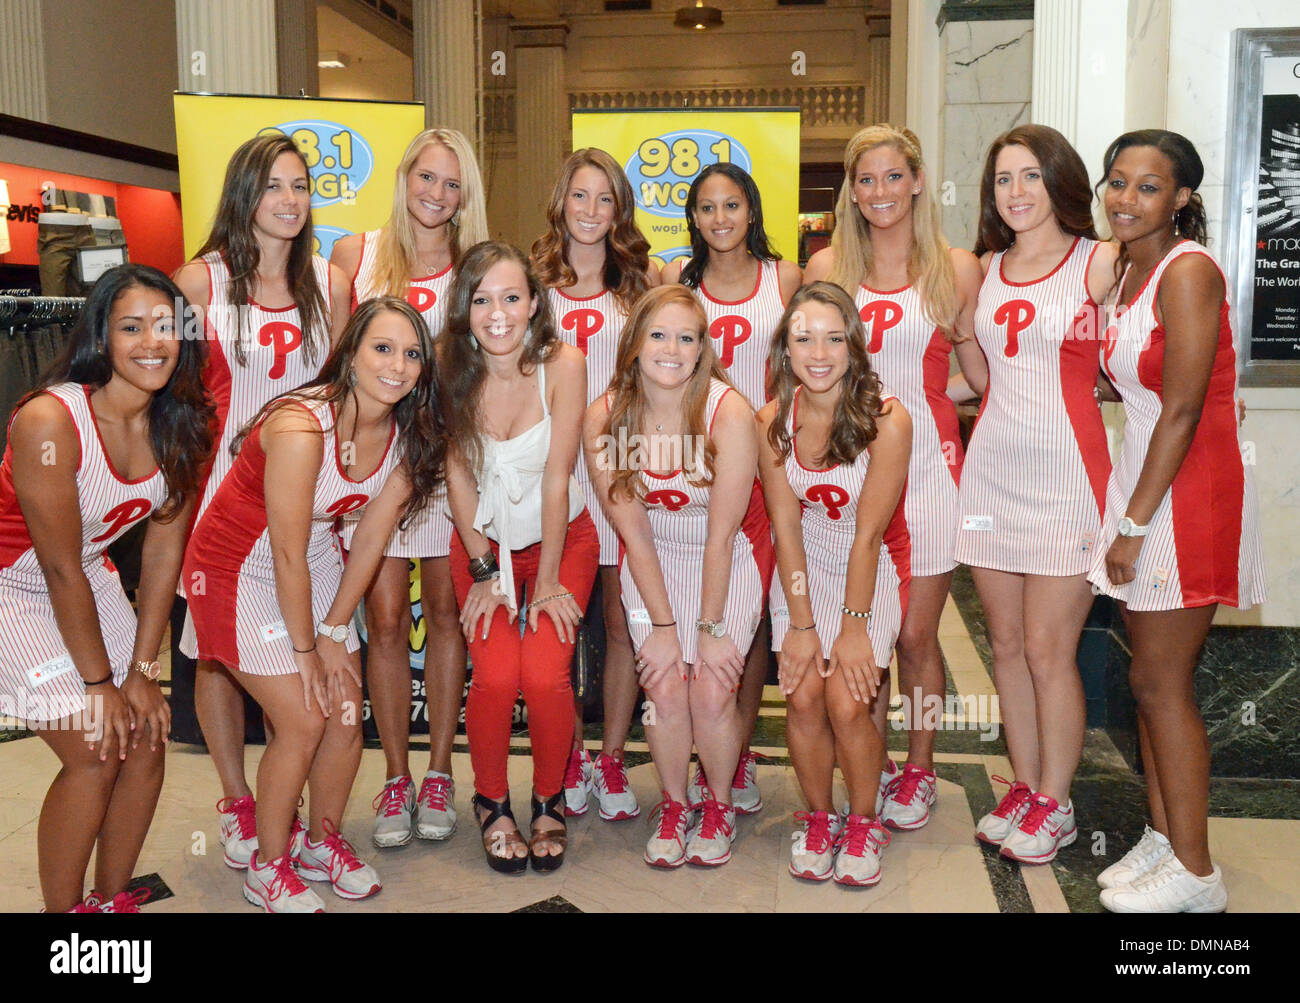 Phillies Ballgirls reveal new uniform at Macy's Center City Philadelphia,  USA - 03.08.12 Stock Photo - Alamy